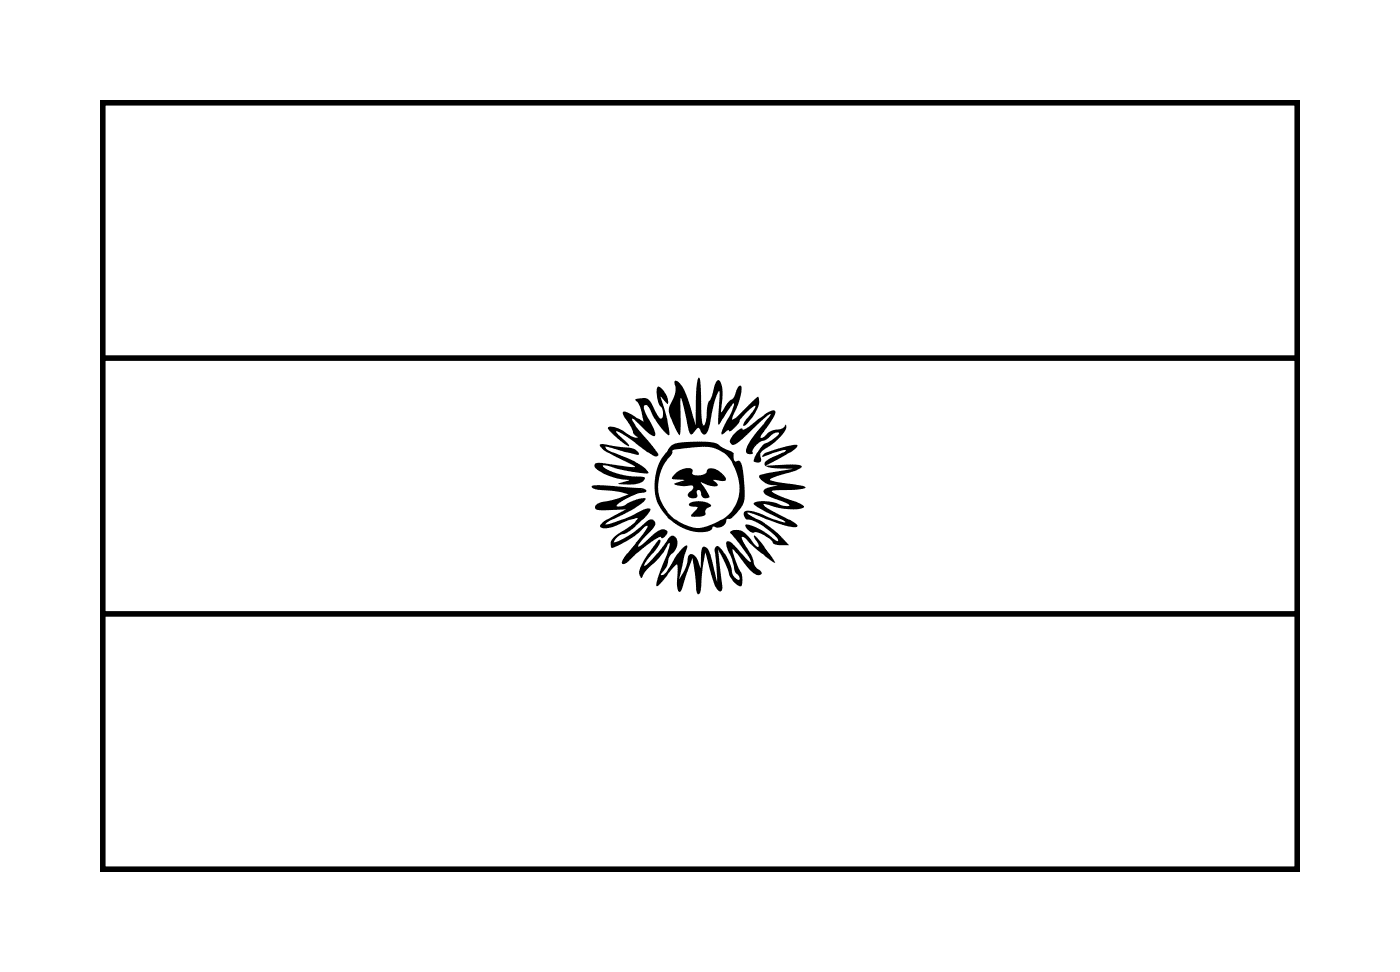  Una bandera argentina 